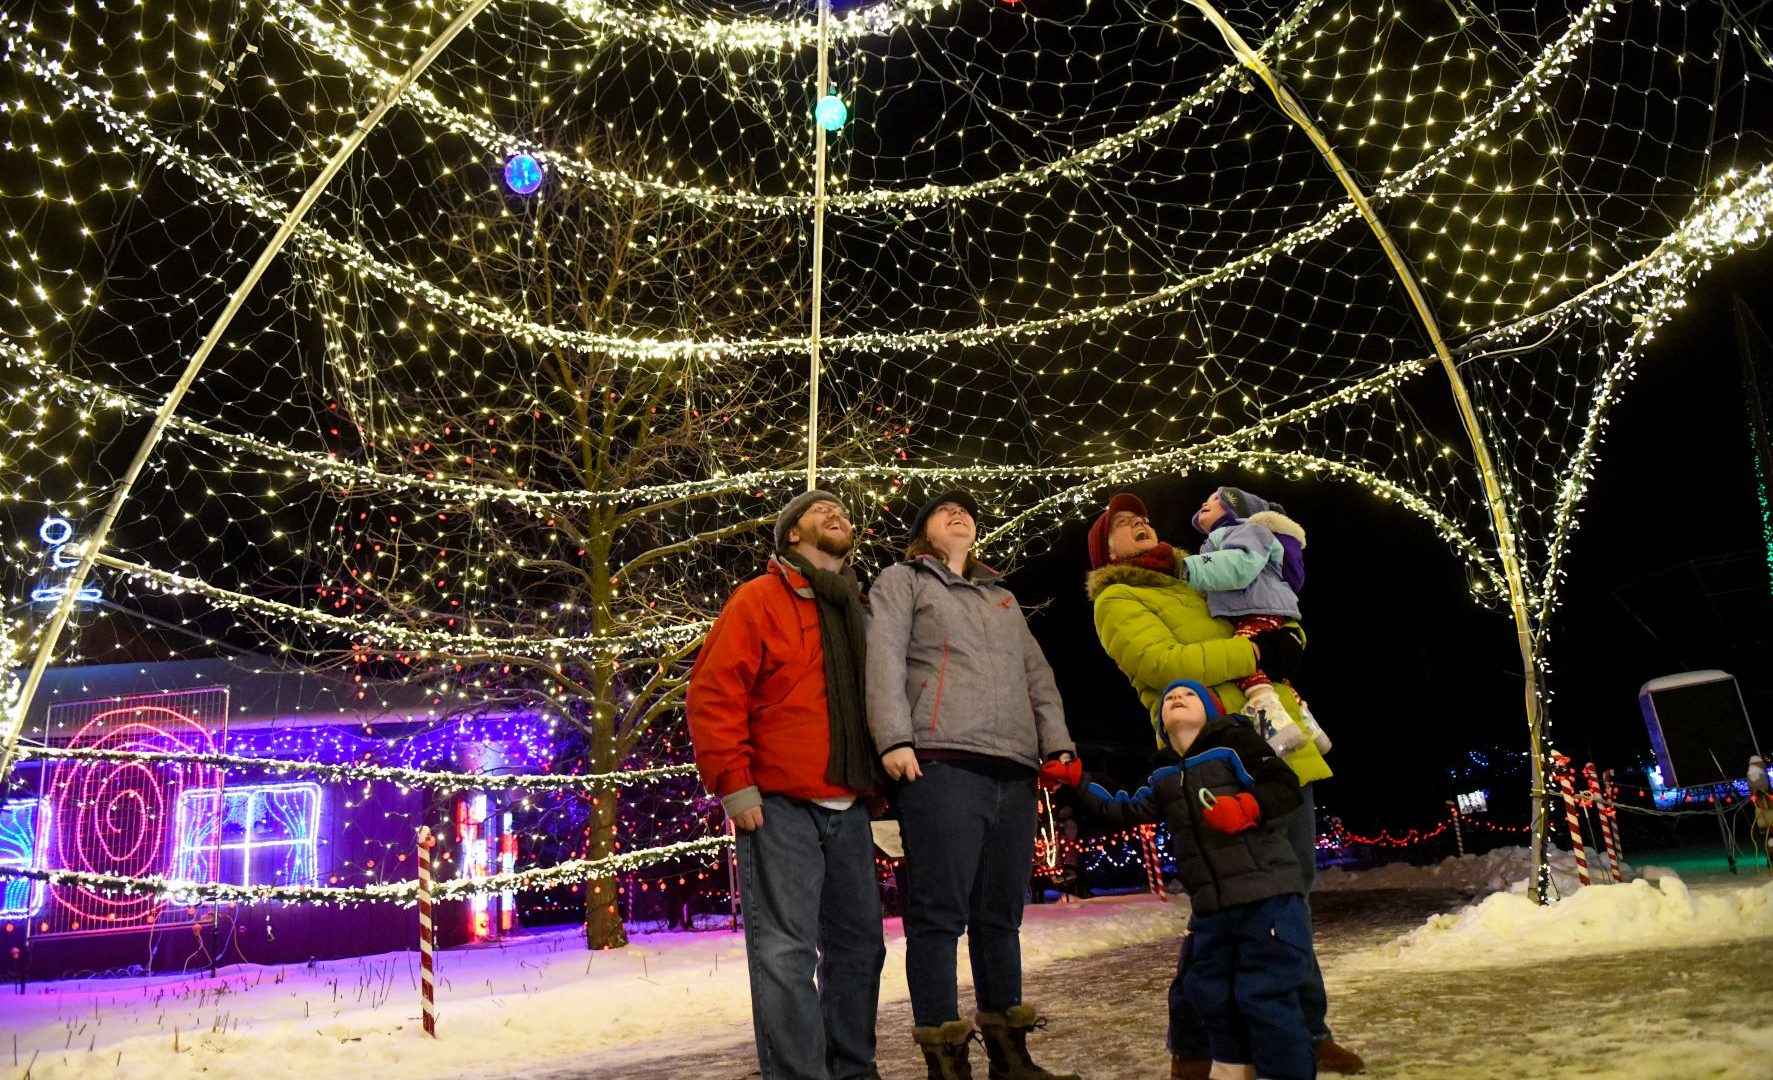 Family under igloo at Rotary Winter Wonderland